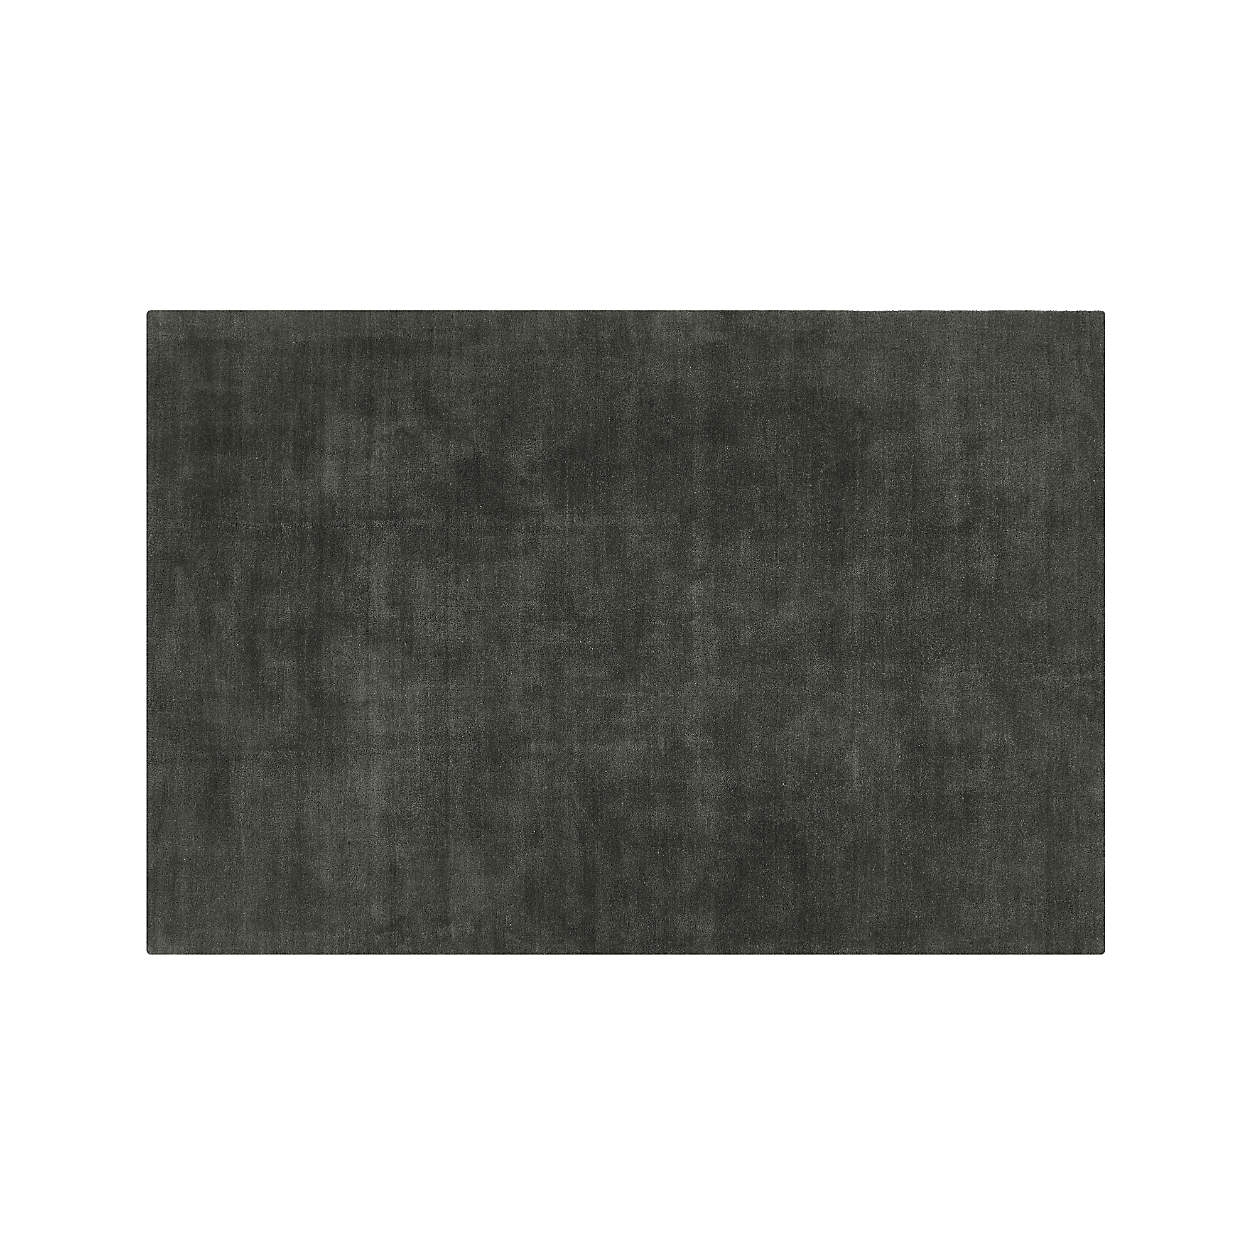 Baxter Carbon Grey Wool Rug 8'x10' - Image 0